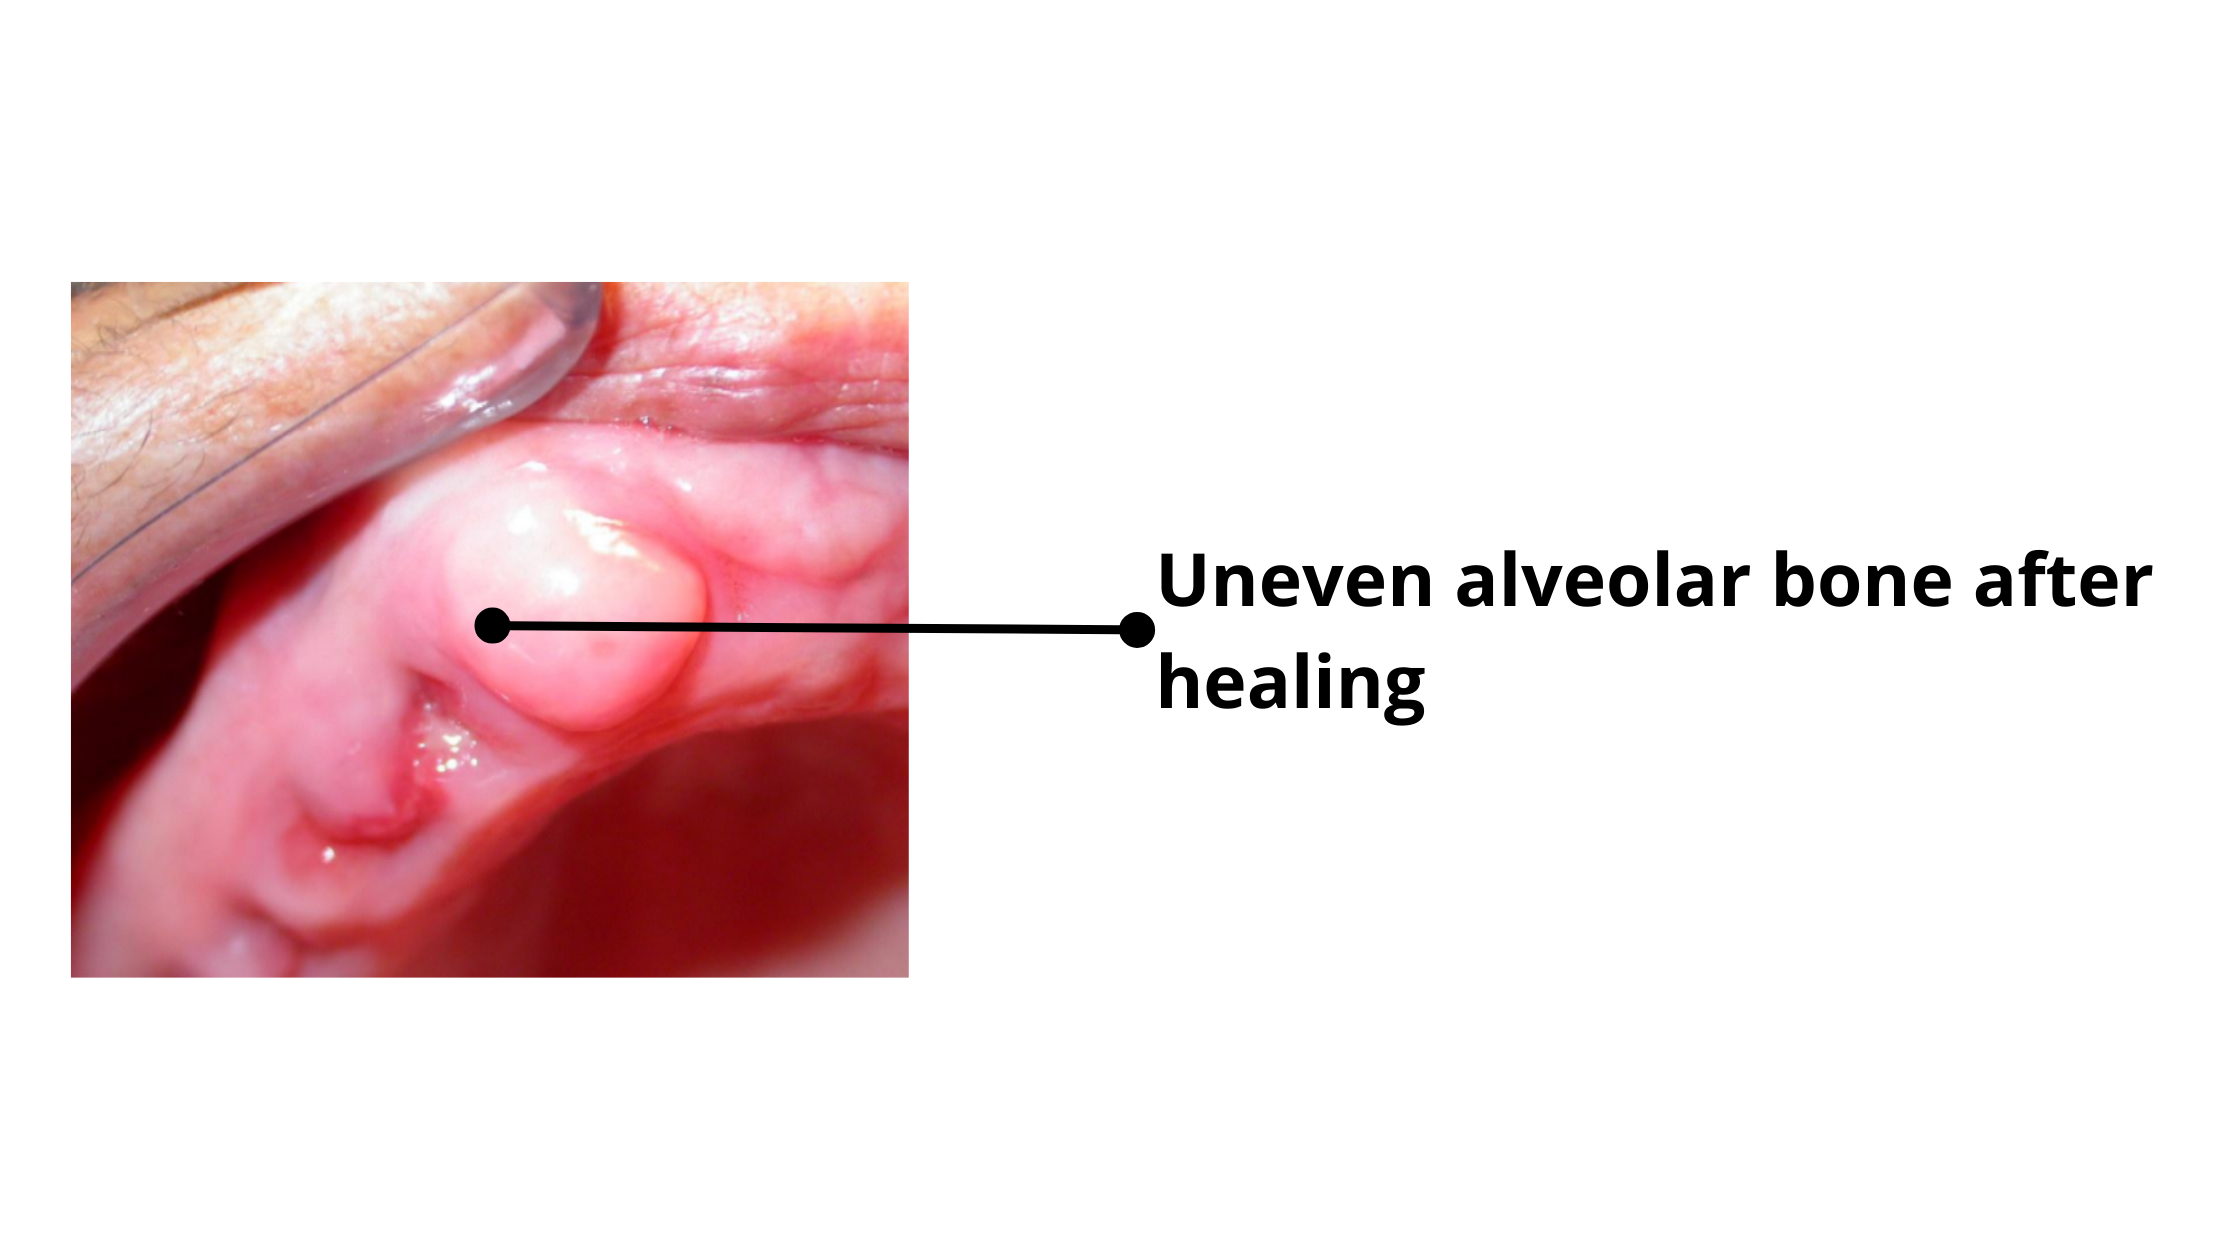 Irregular alveolar bone ridge after tooth extraction healing